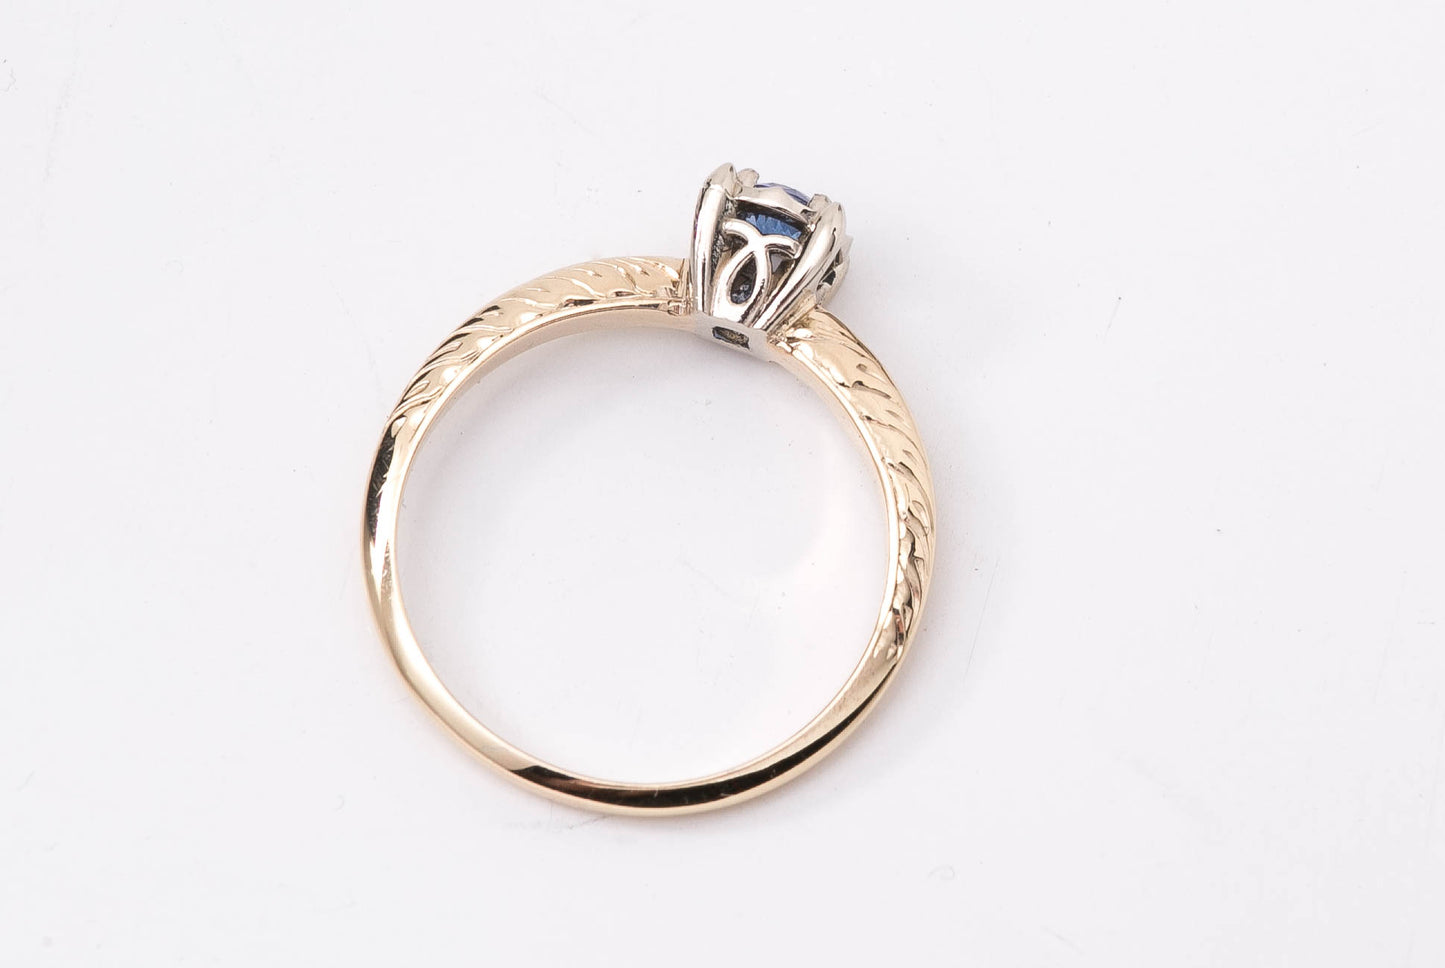 Blue Montana Sapphire Vintage Ring - Hand Engraved - Restored Vintage Ring